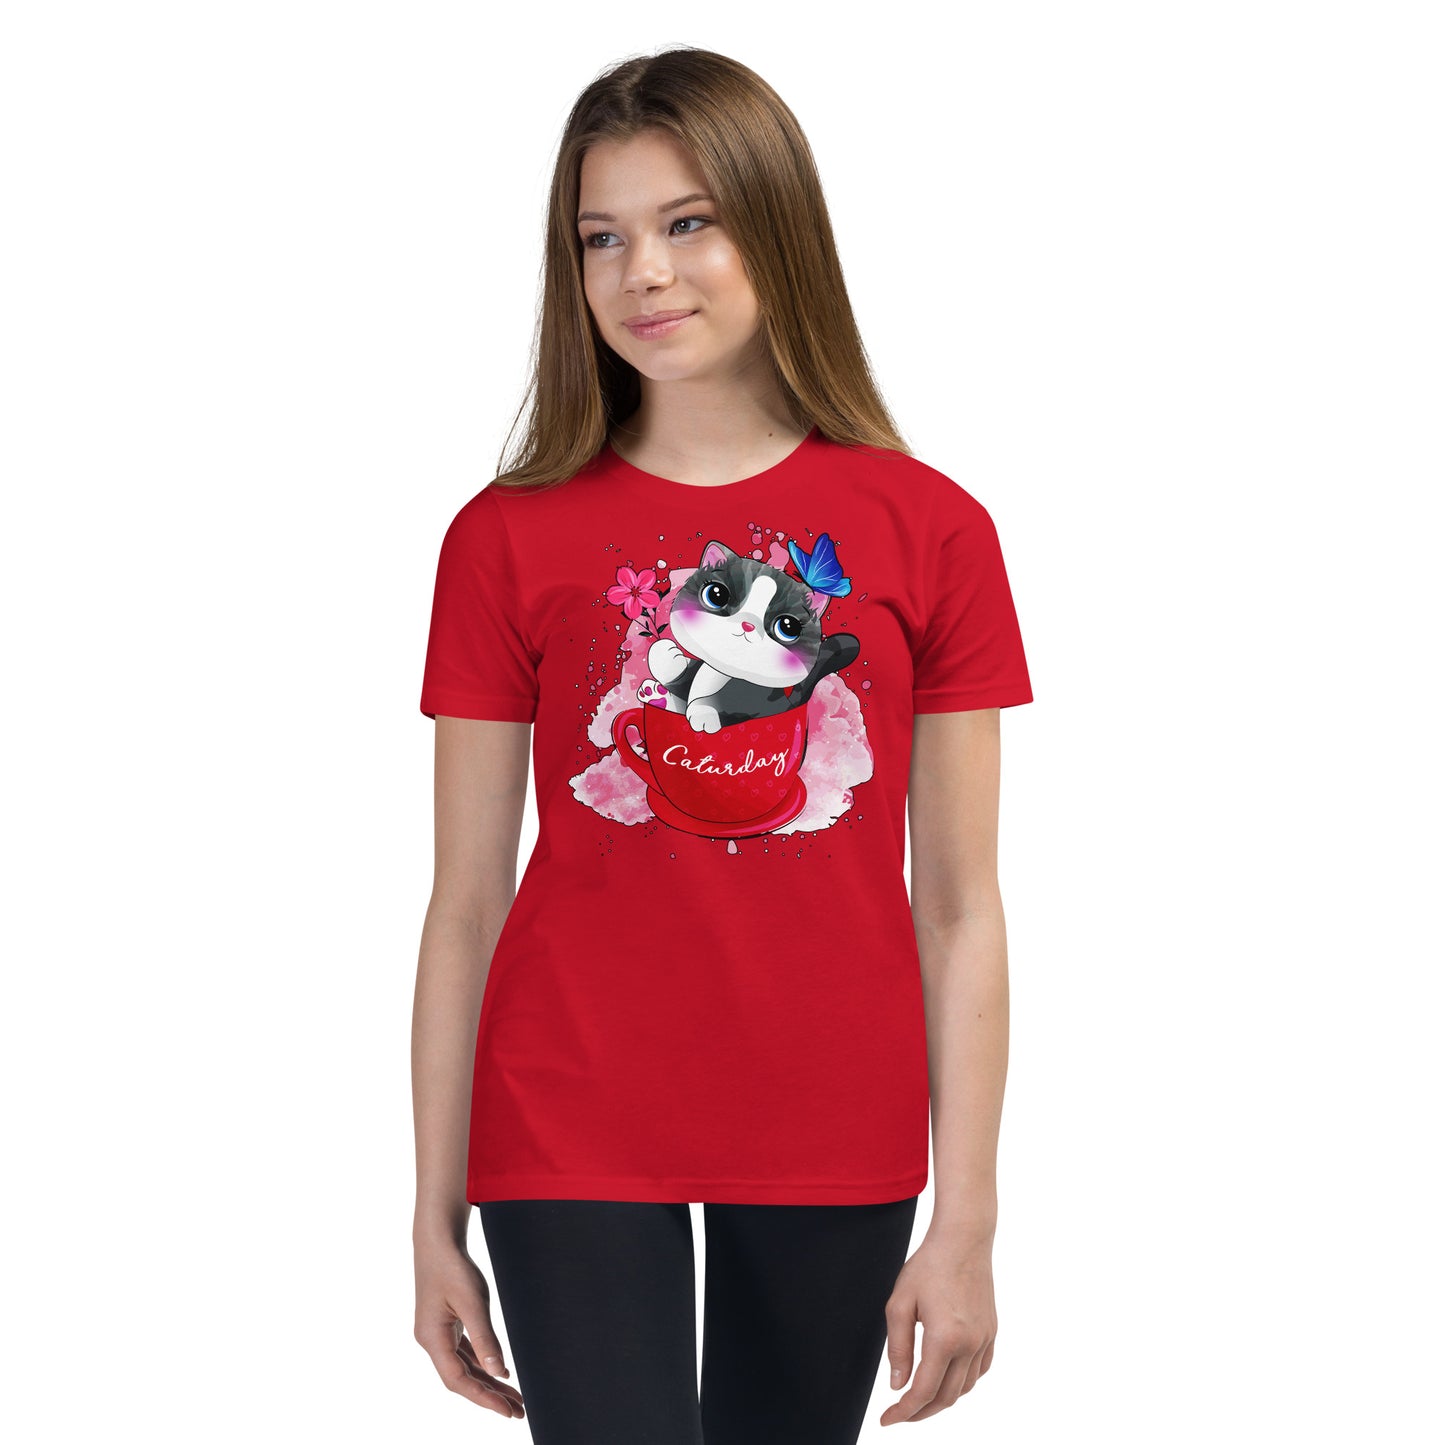 Cute Kitty Cat T-shirt, No. 0334